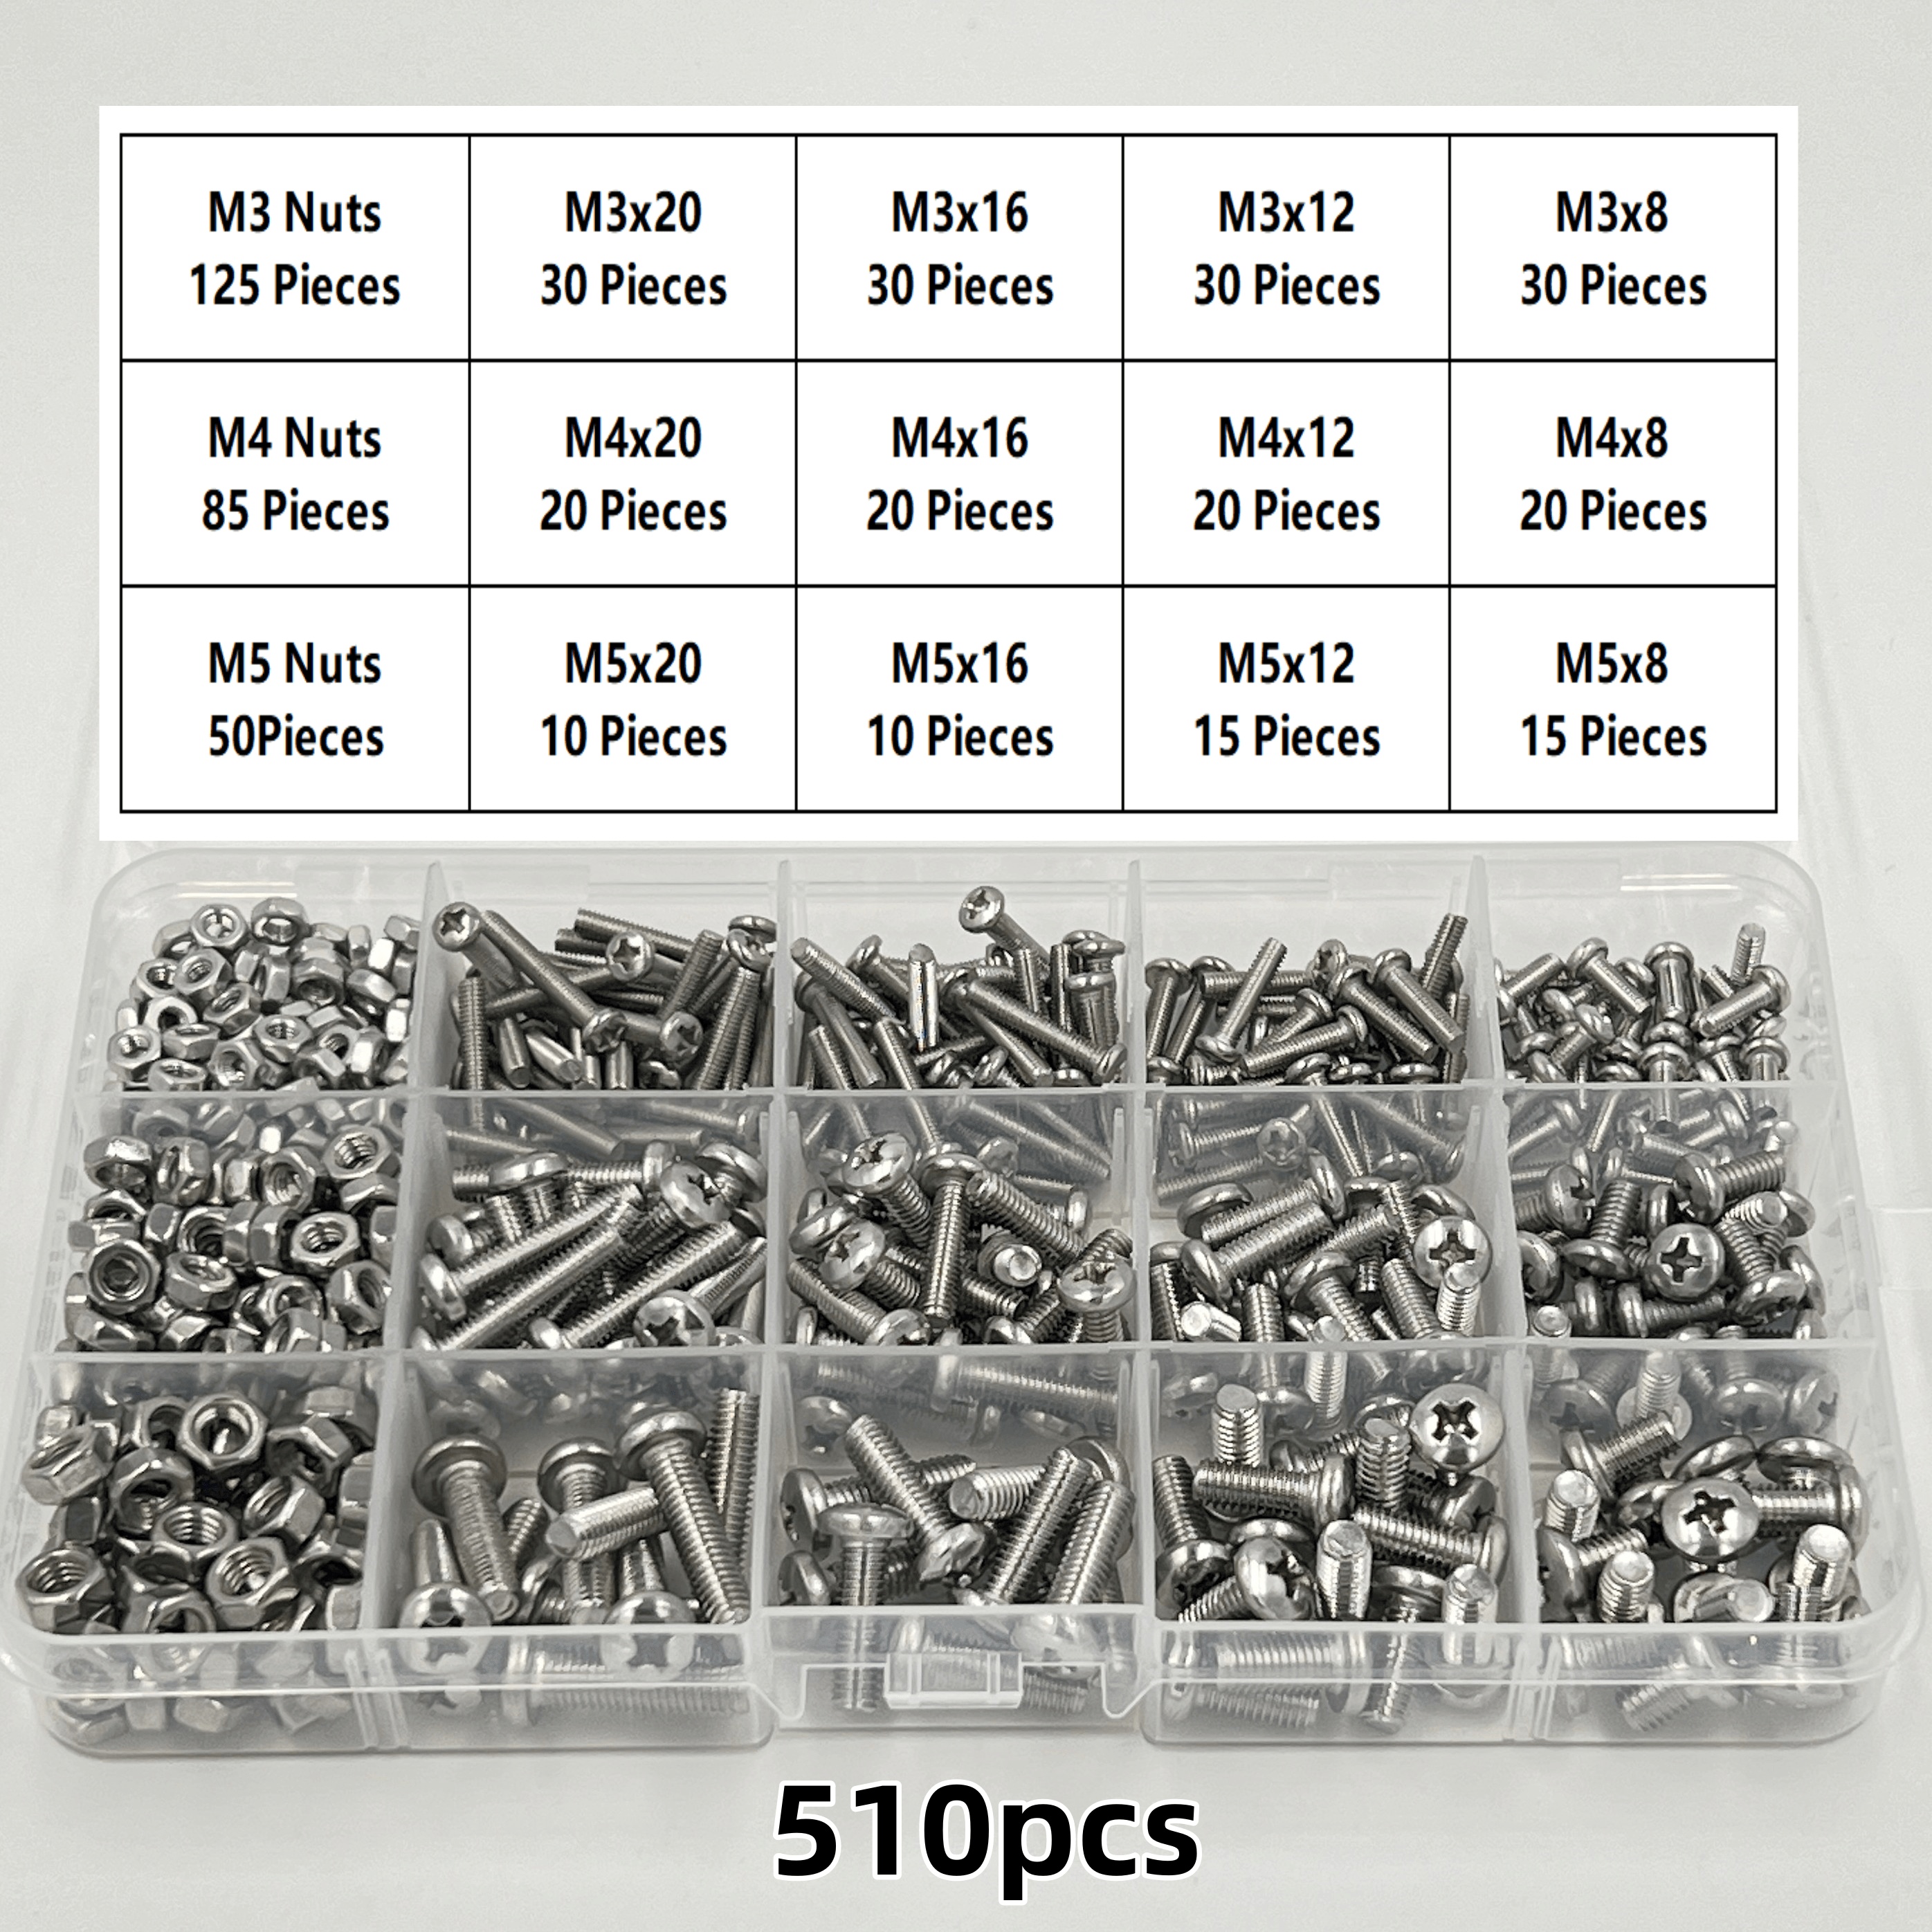 MMOBIEL M2 - Kit de montaje de tuerca hexagonal de latón y tornillo de PC  M2 SSD para unidades M2, tornillo Asus M2 + espaciador de soporte de tuerca